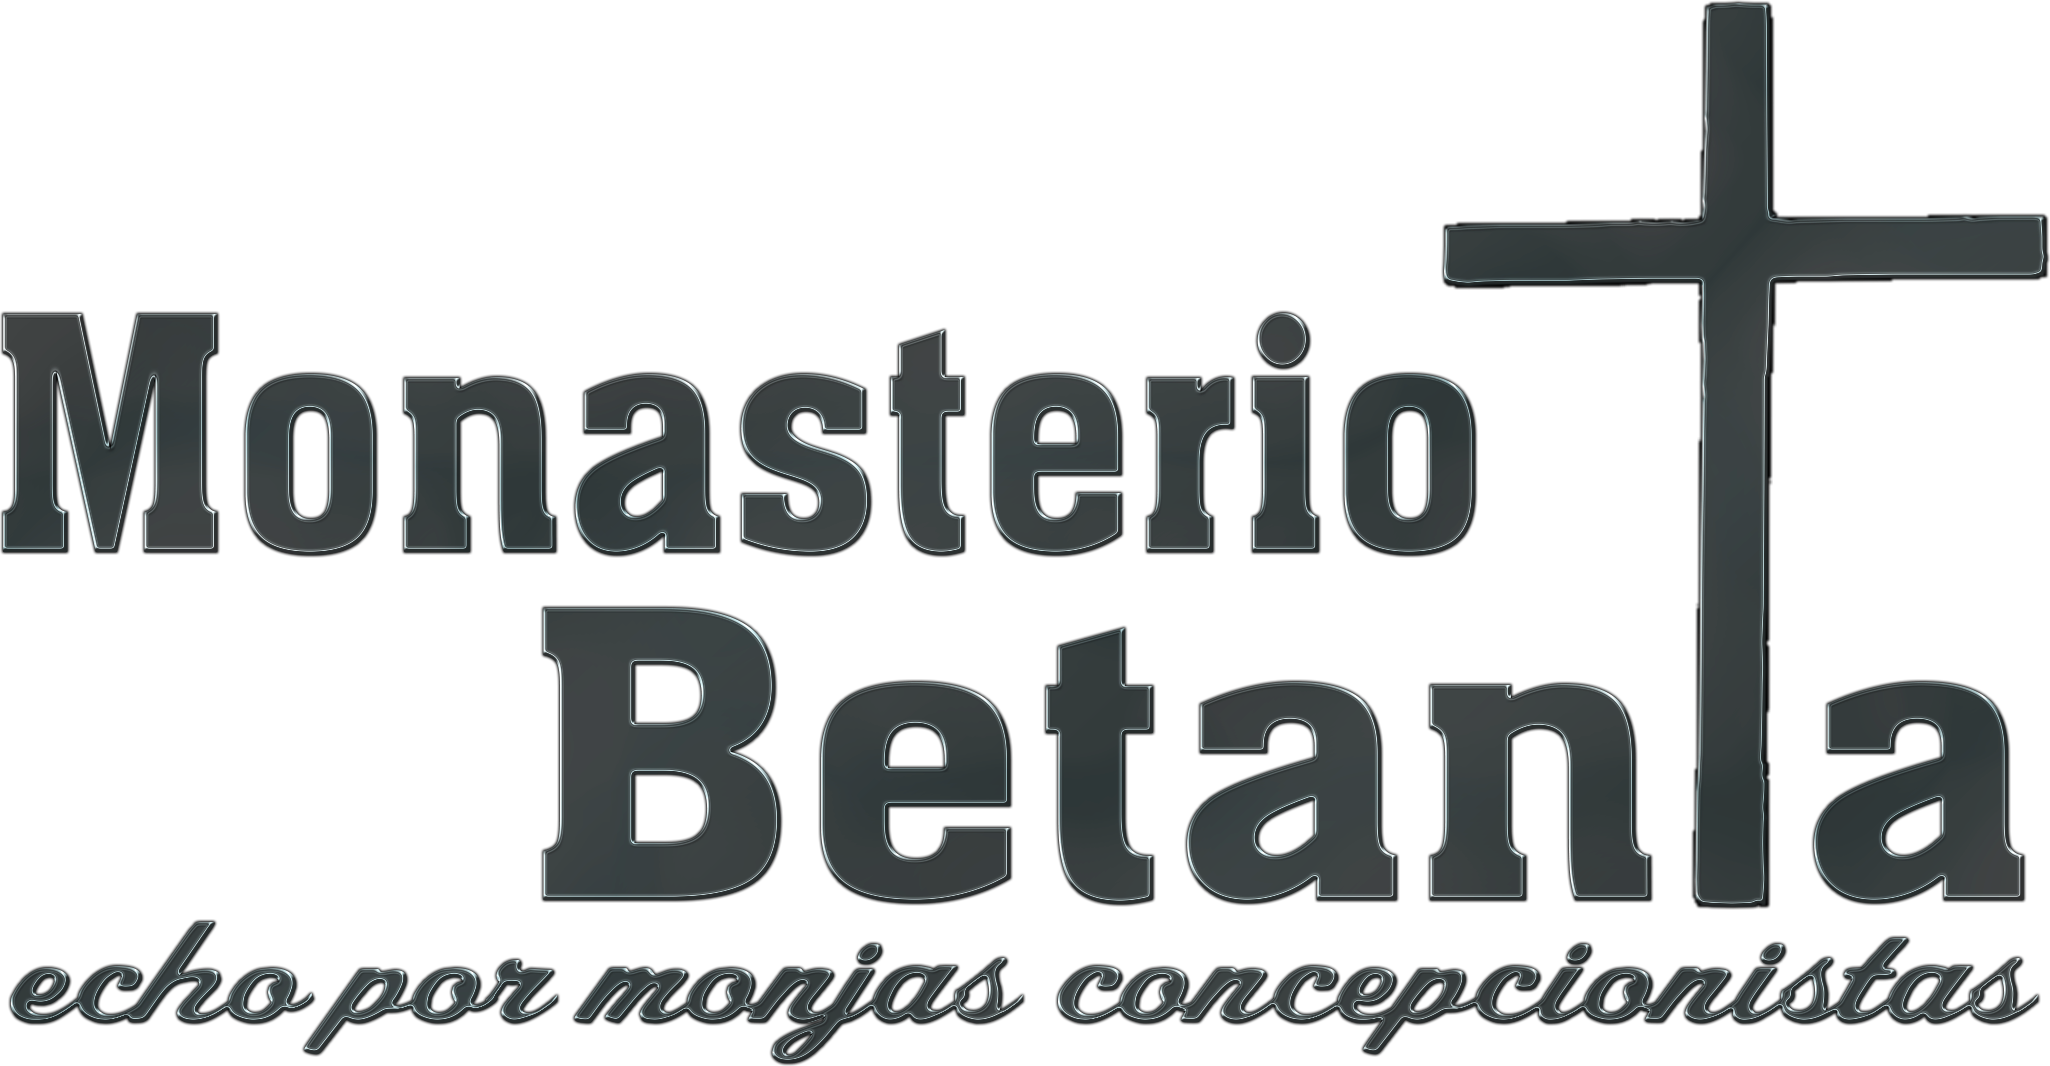 Monasterio Betania